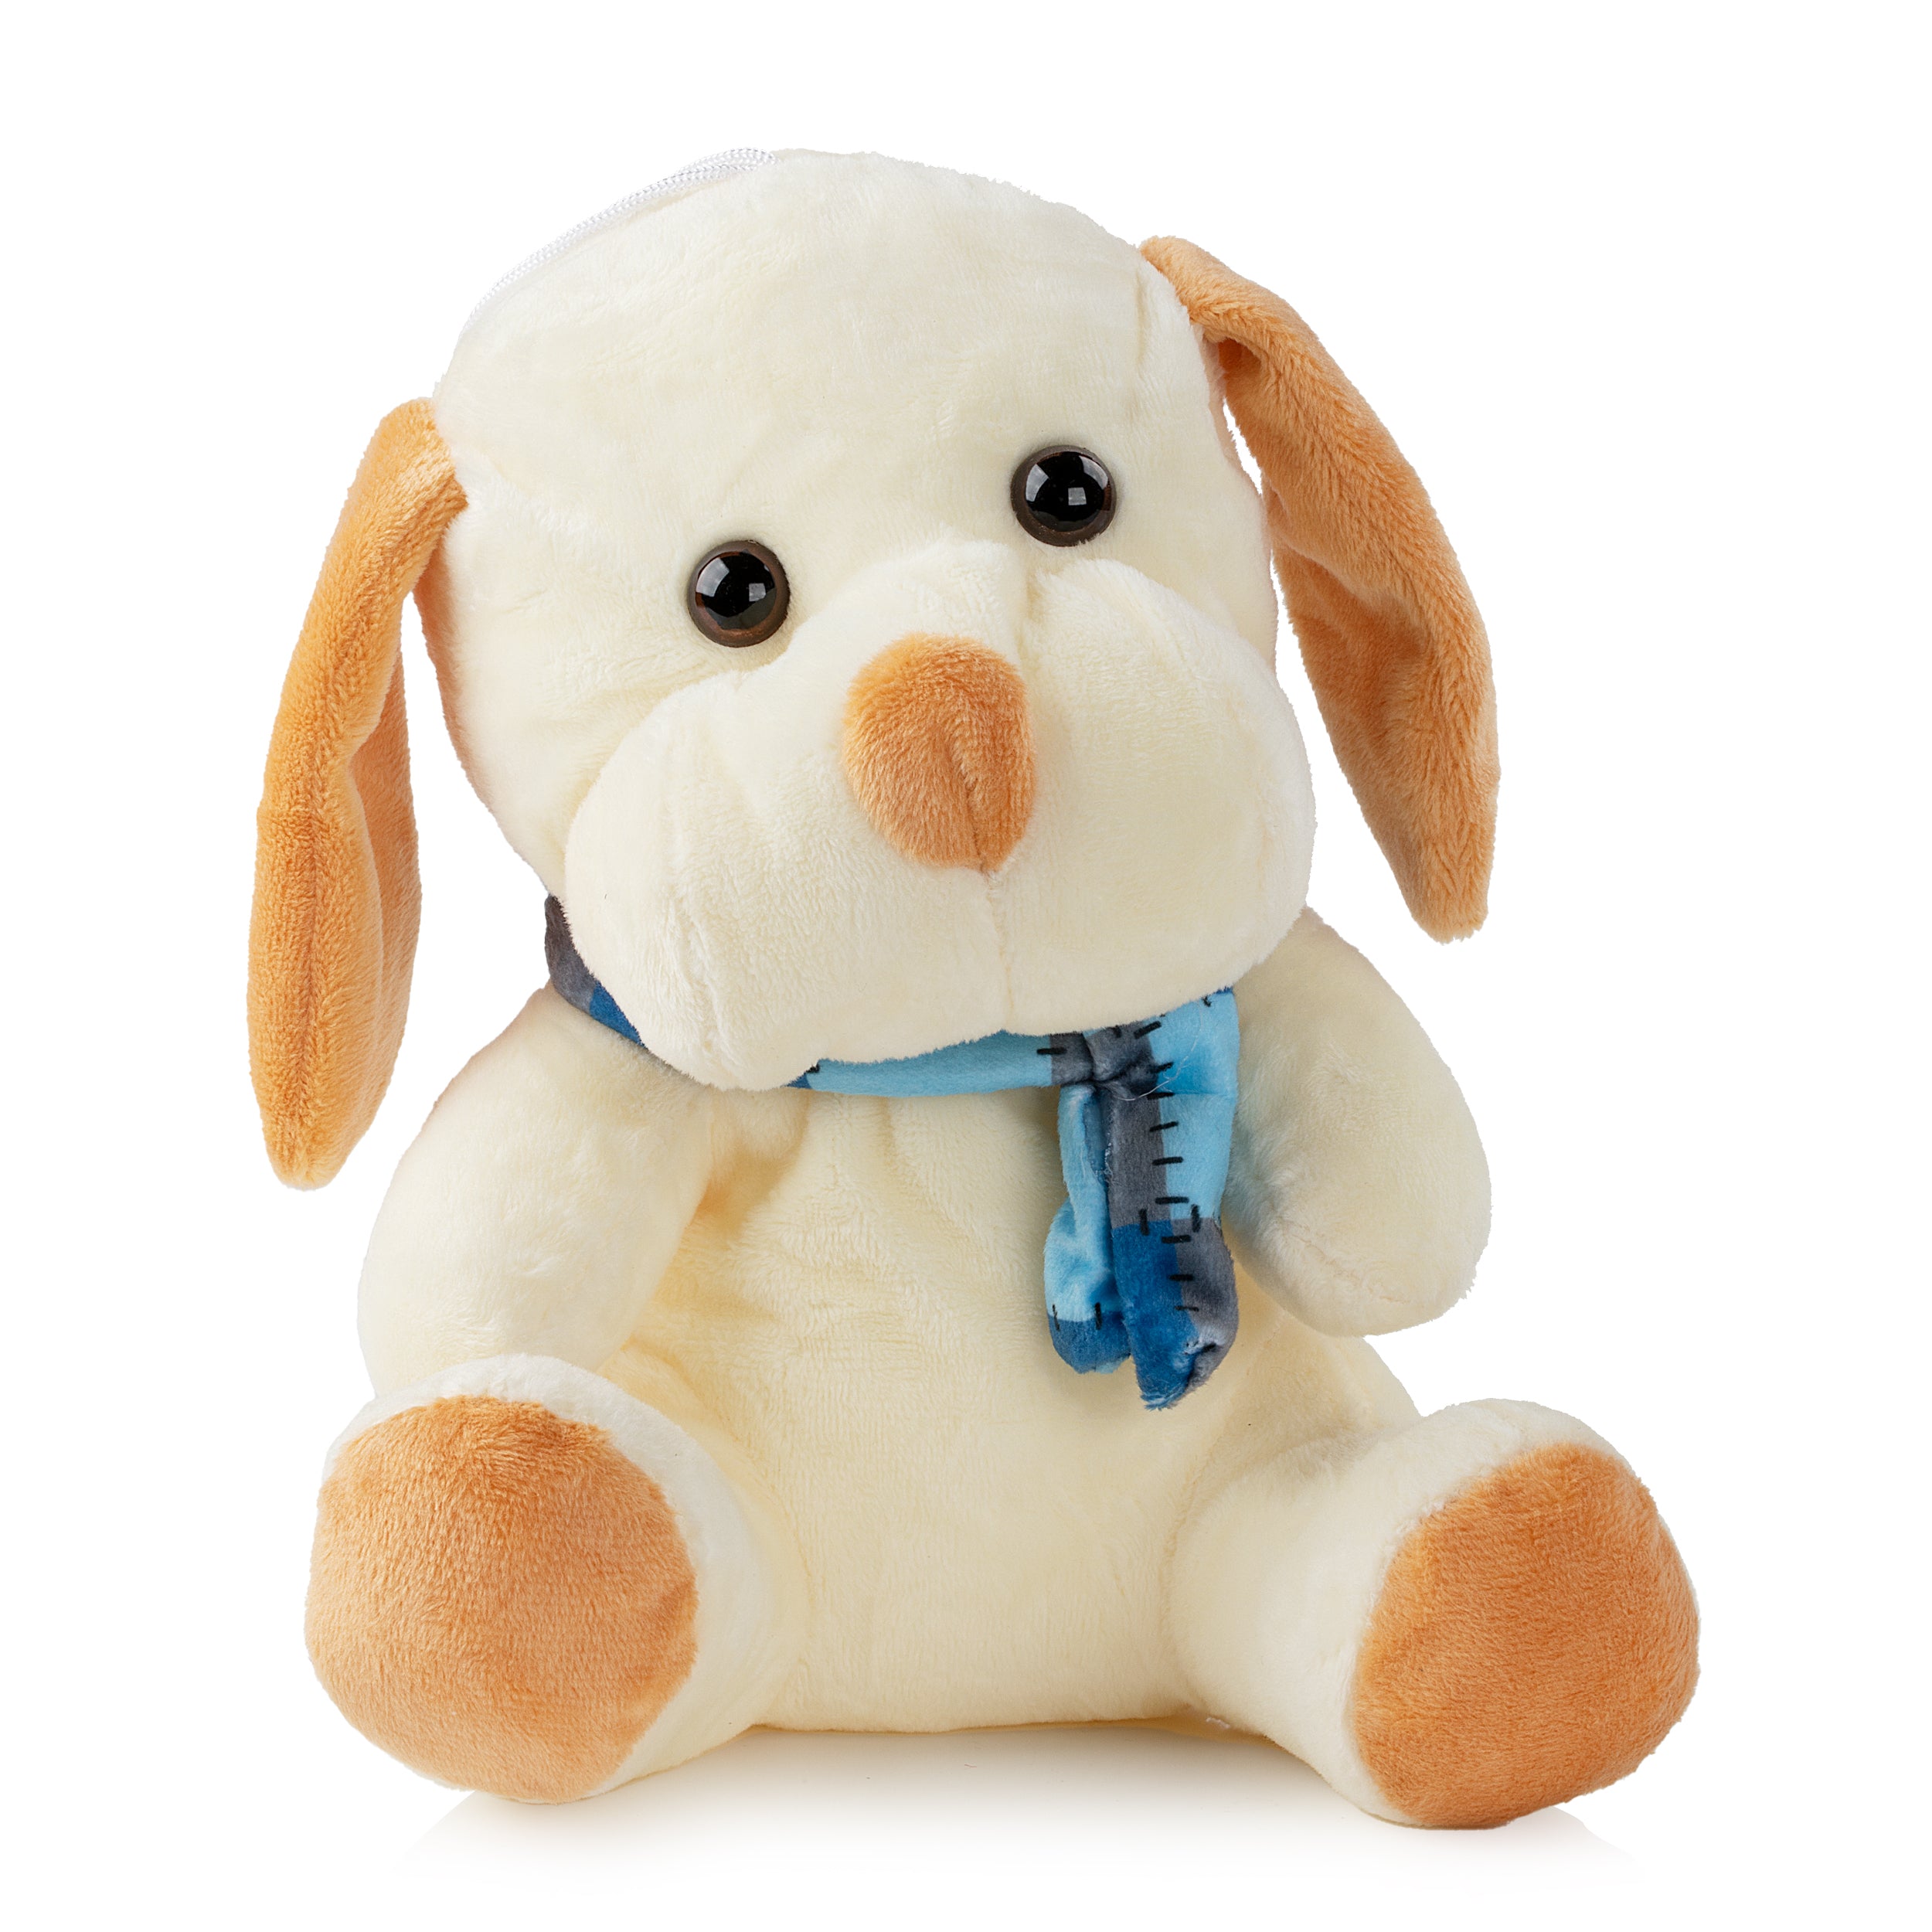 Plush Toys - Noah's Ark Stuffed Animals 8-12"